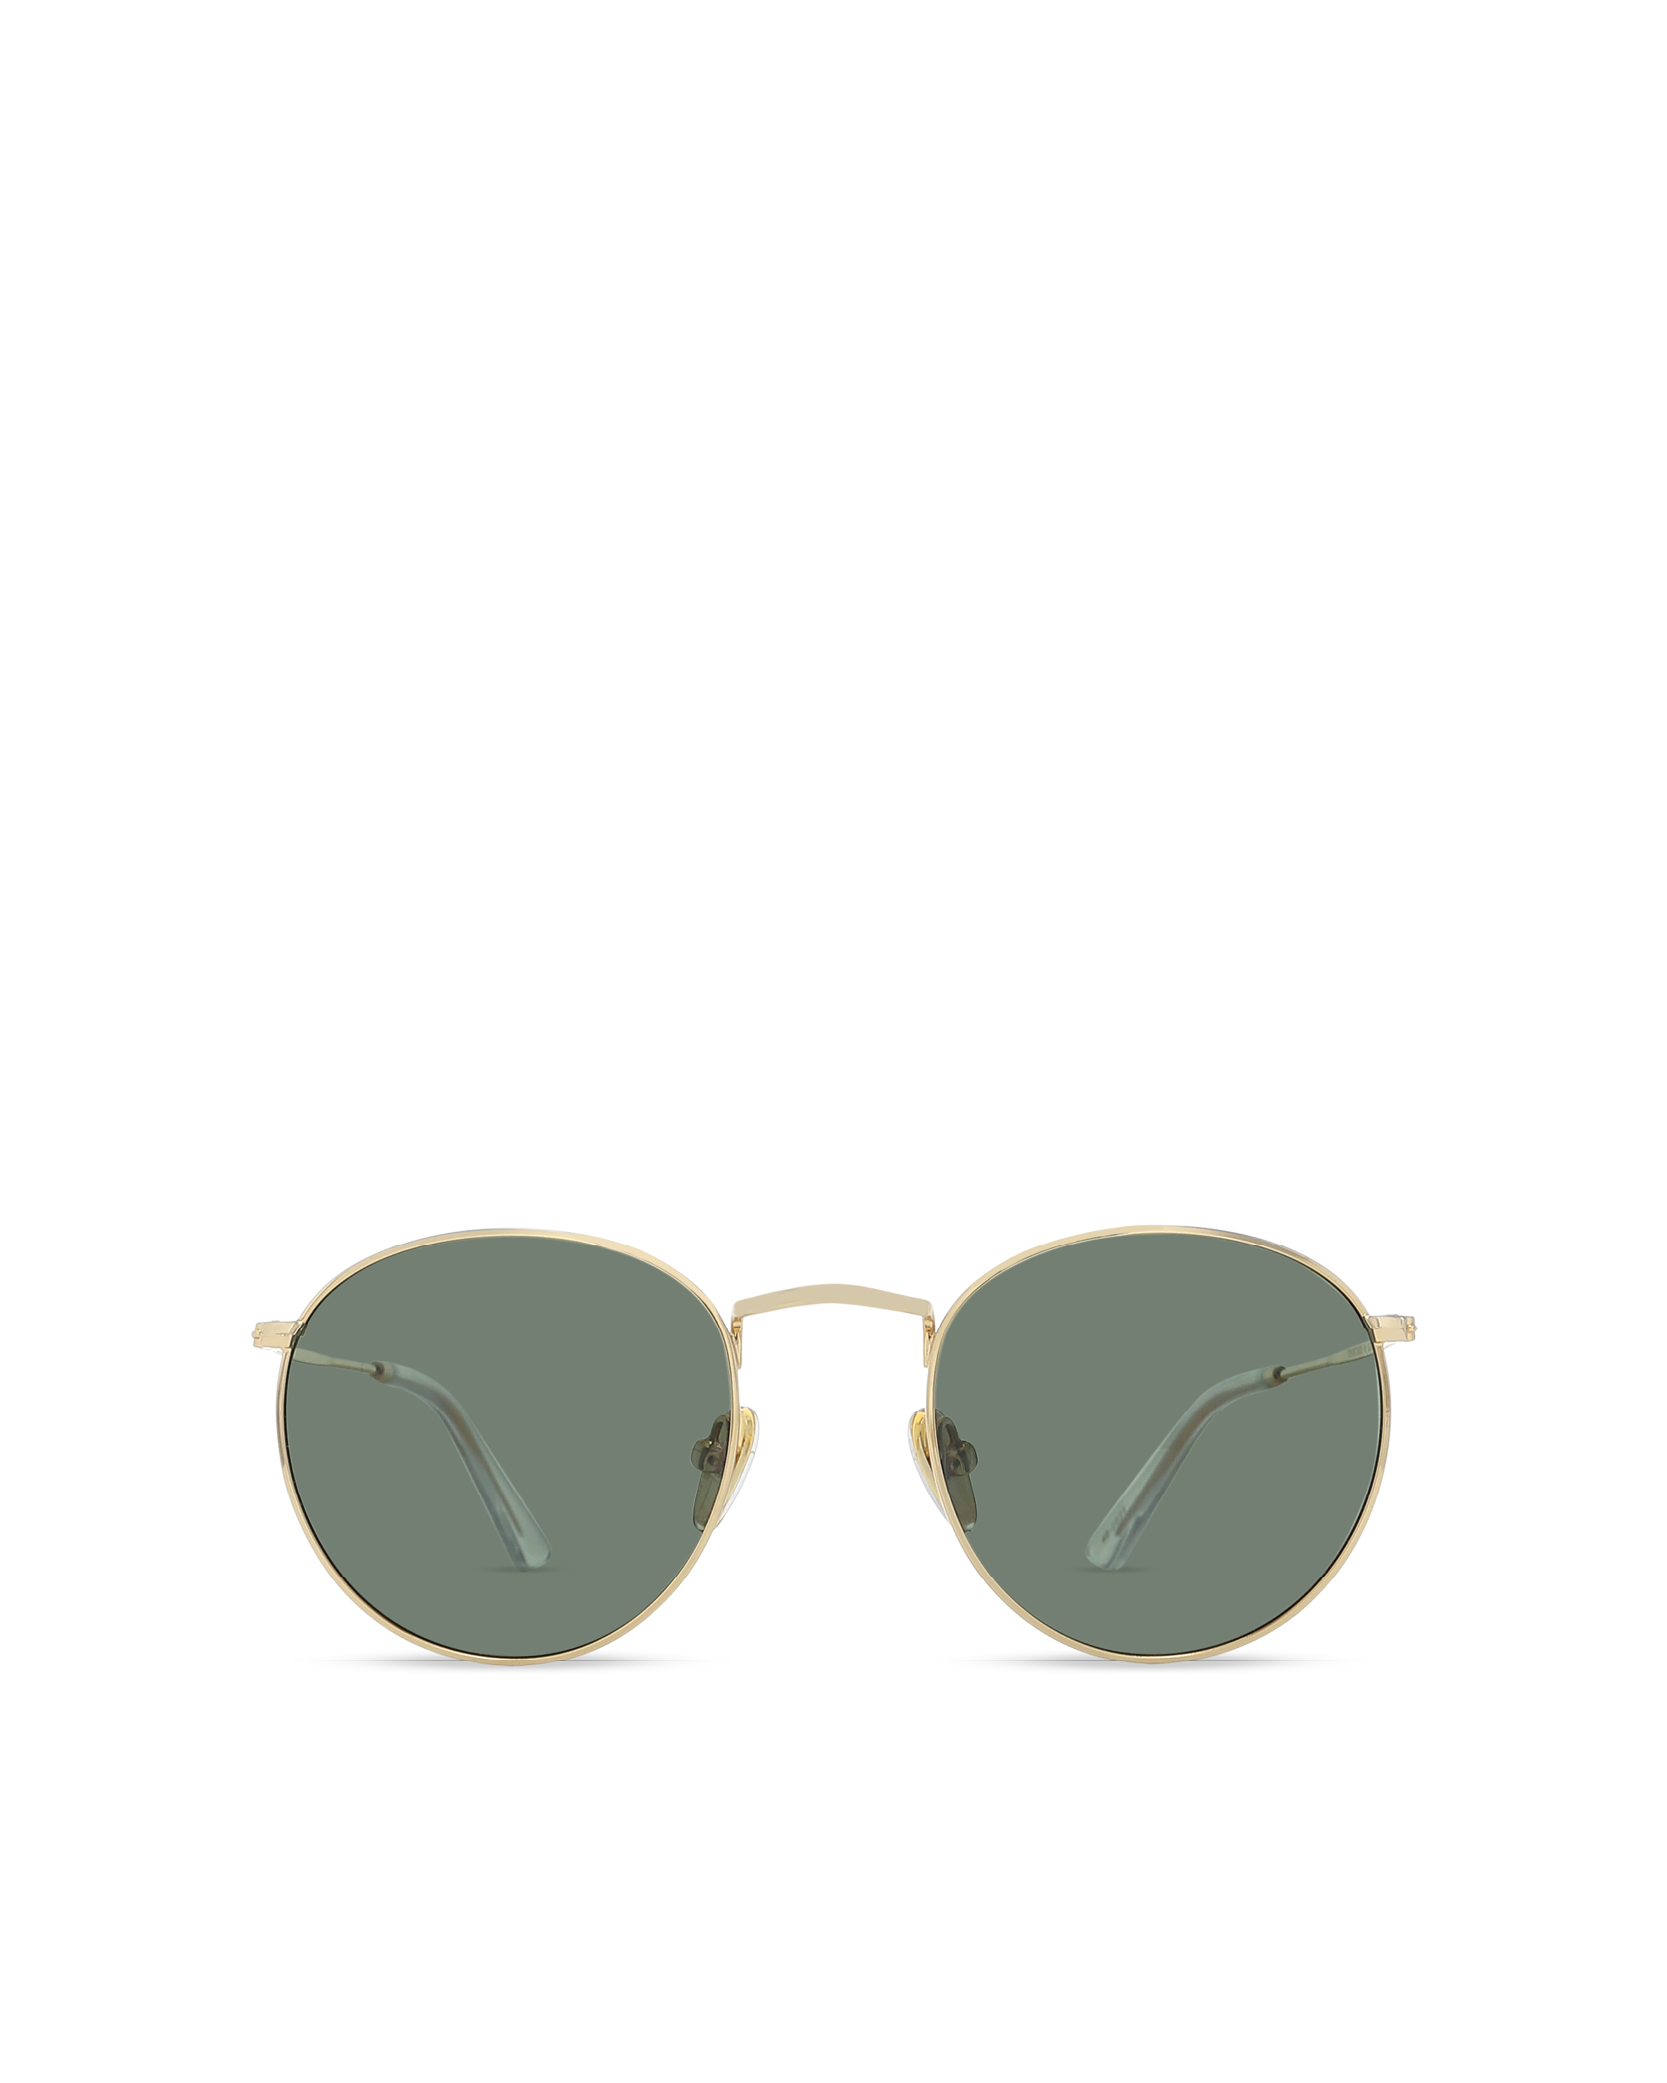 THE HAWKINS - GOLD-GREEN  $69.95 SUNGLASSES BANBE Banbé Eyewear